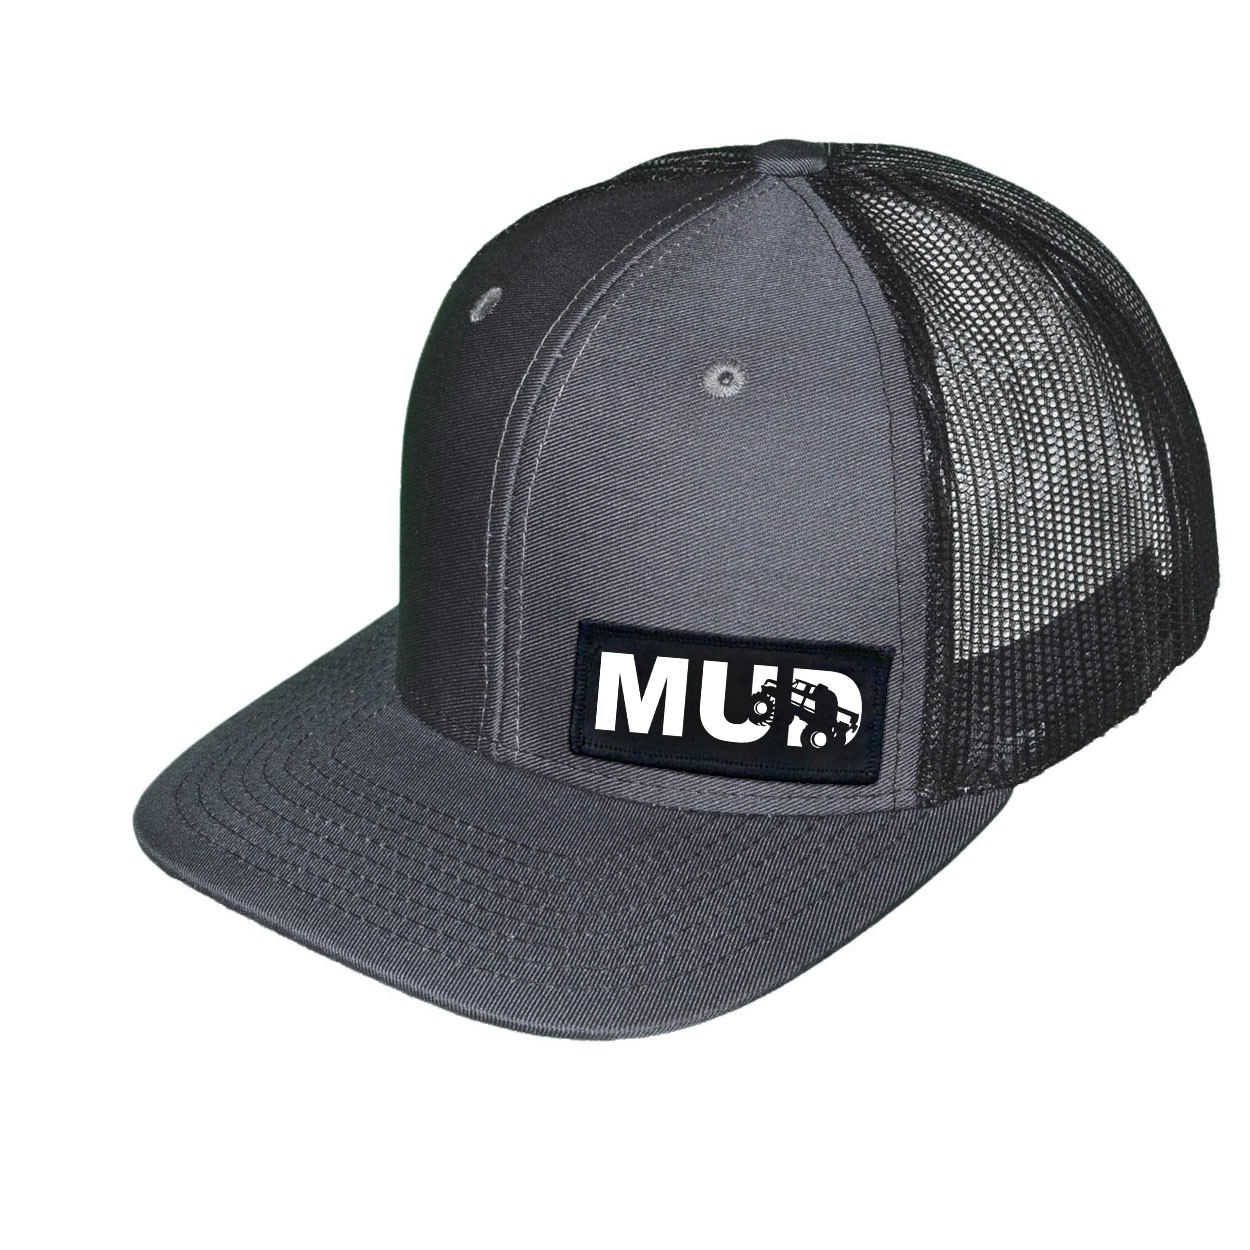 Mud Truck Logo Night Out Woven Patch Snapback Trucker Hat Gray/Black (White Logo)